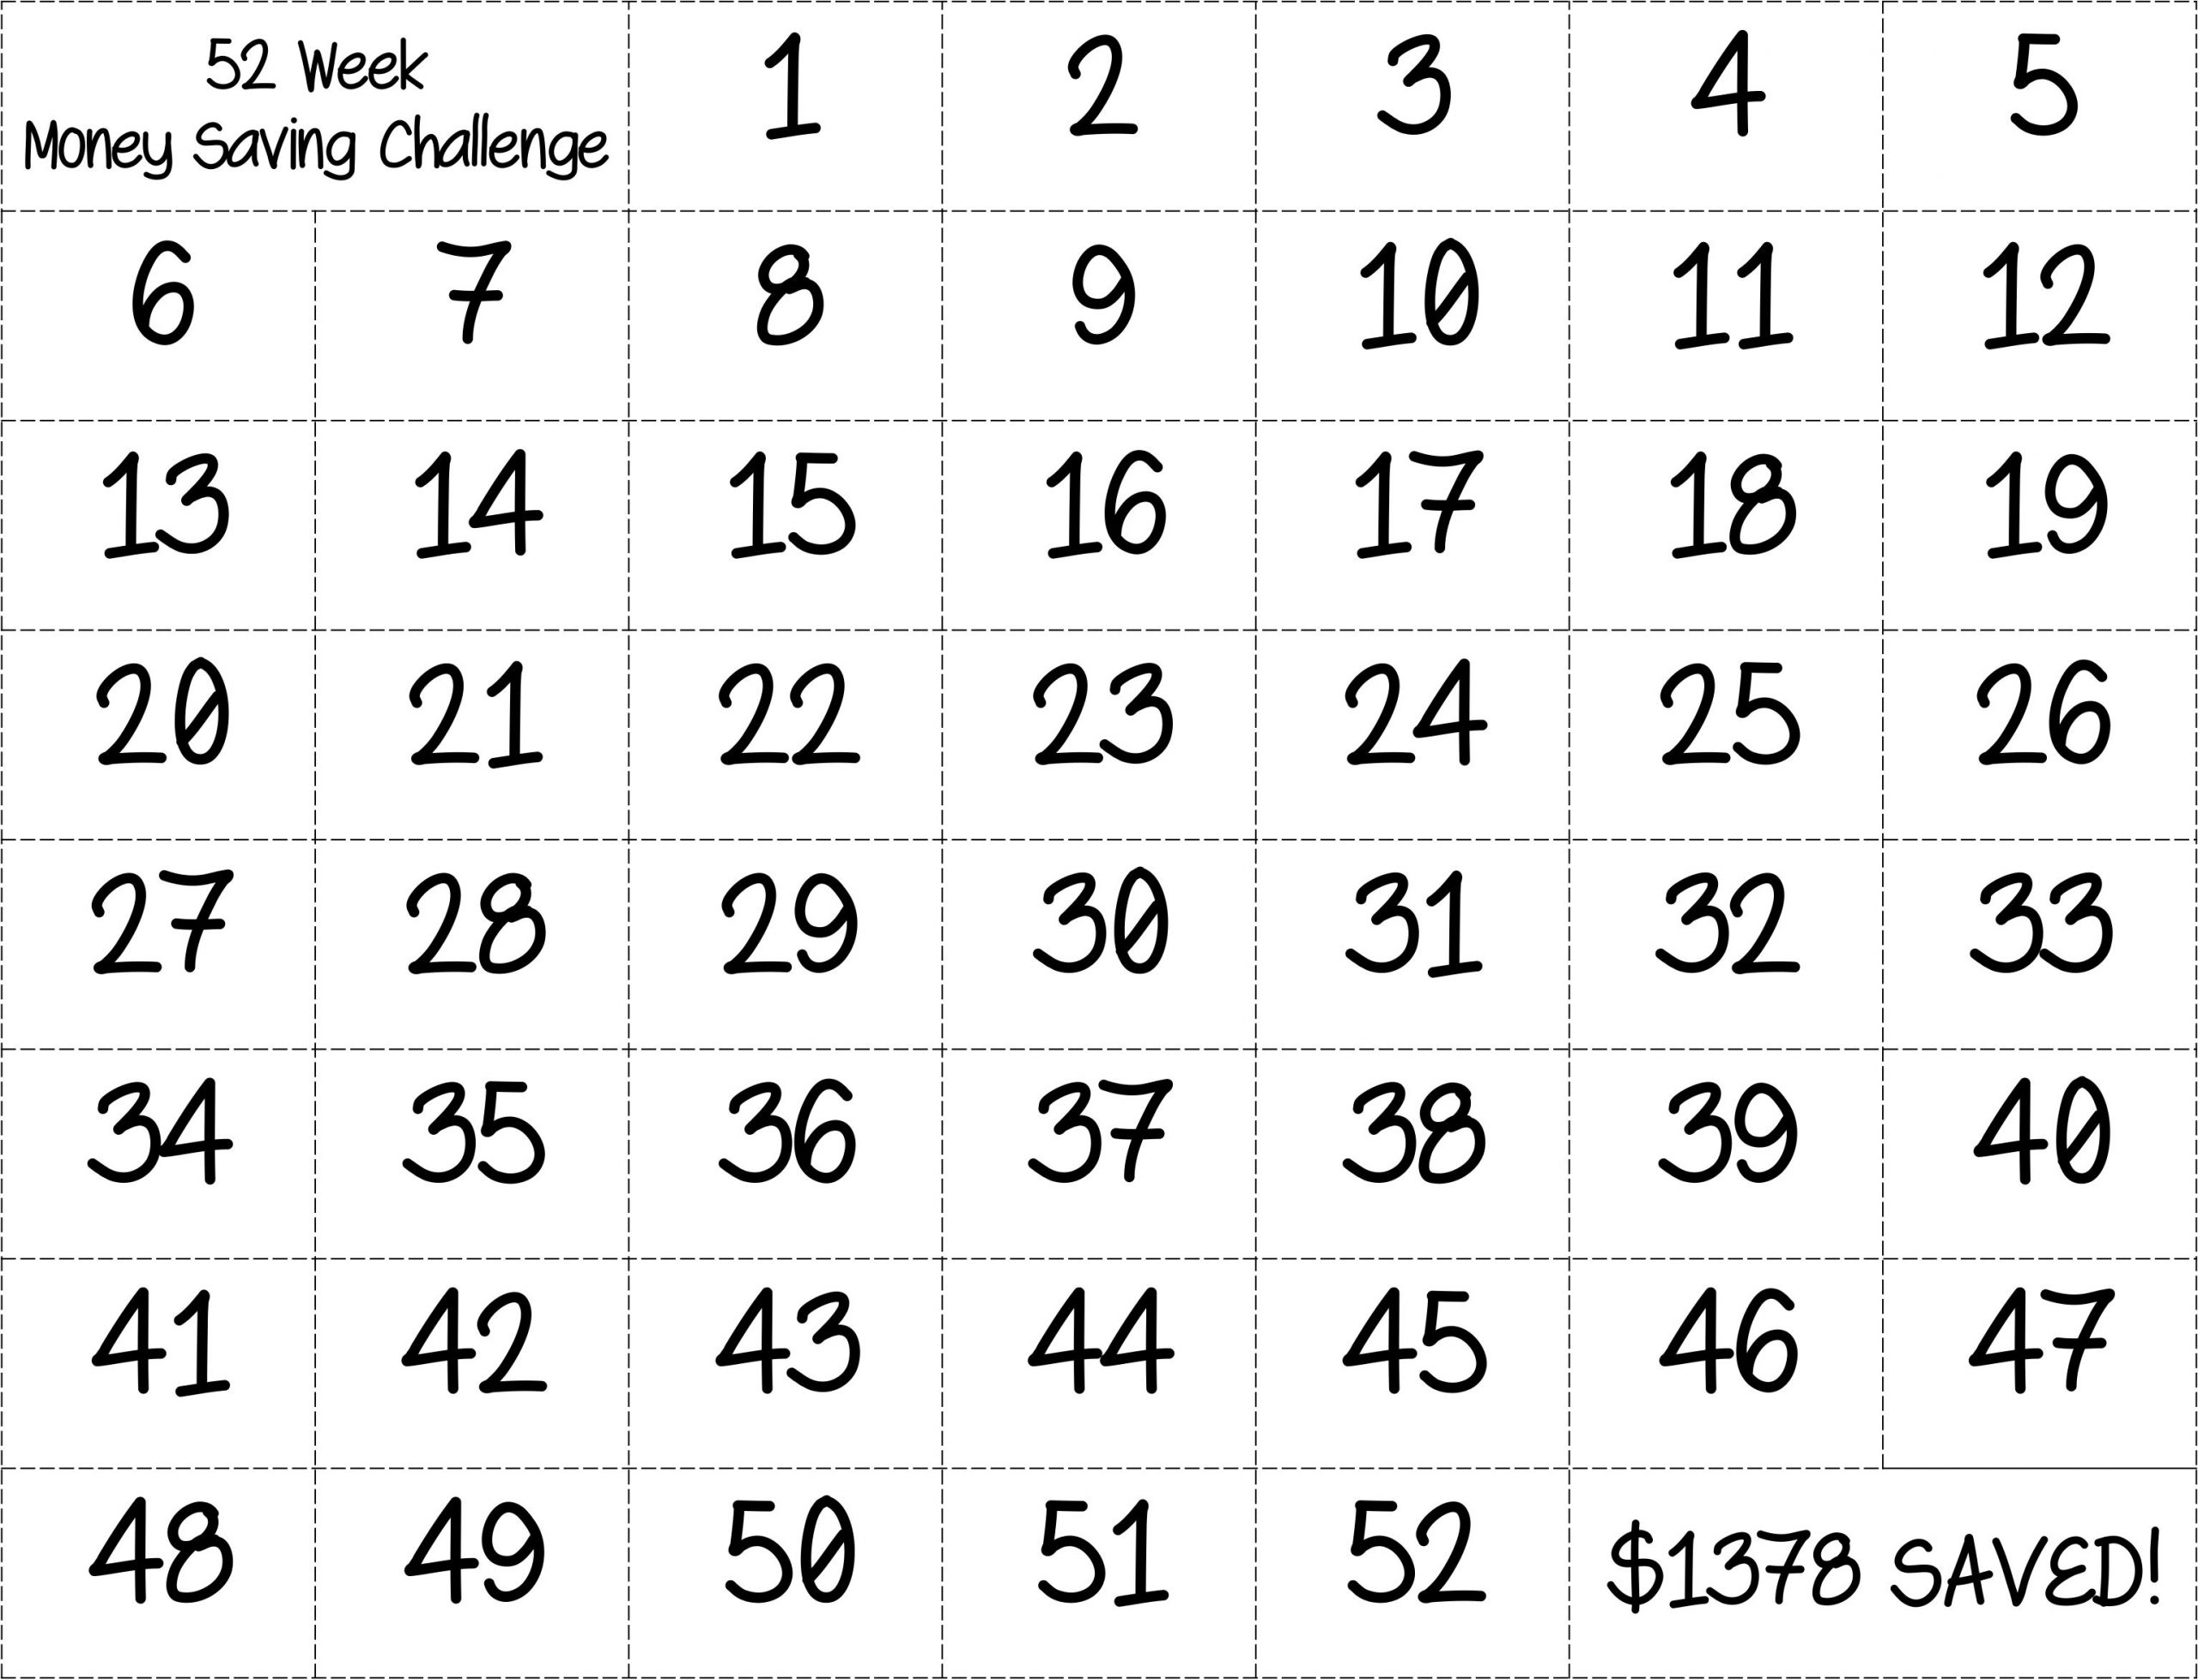 Bingo Style - 52 Week Money Saving Challenge. Just Color In